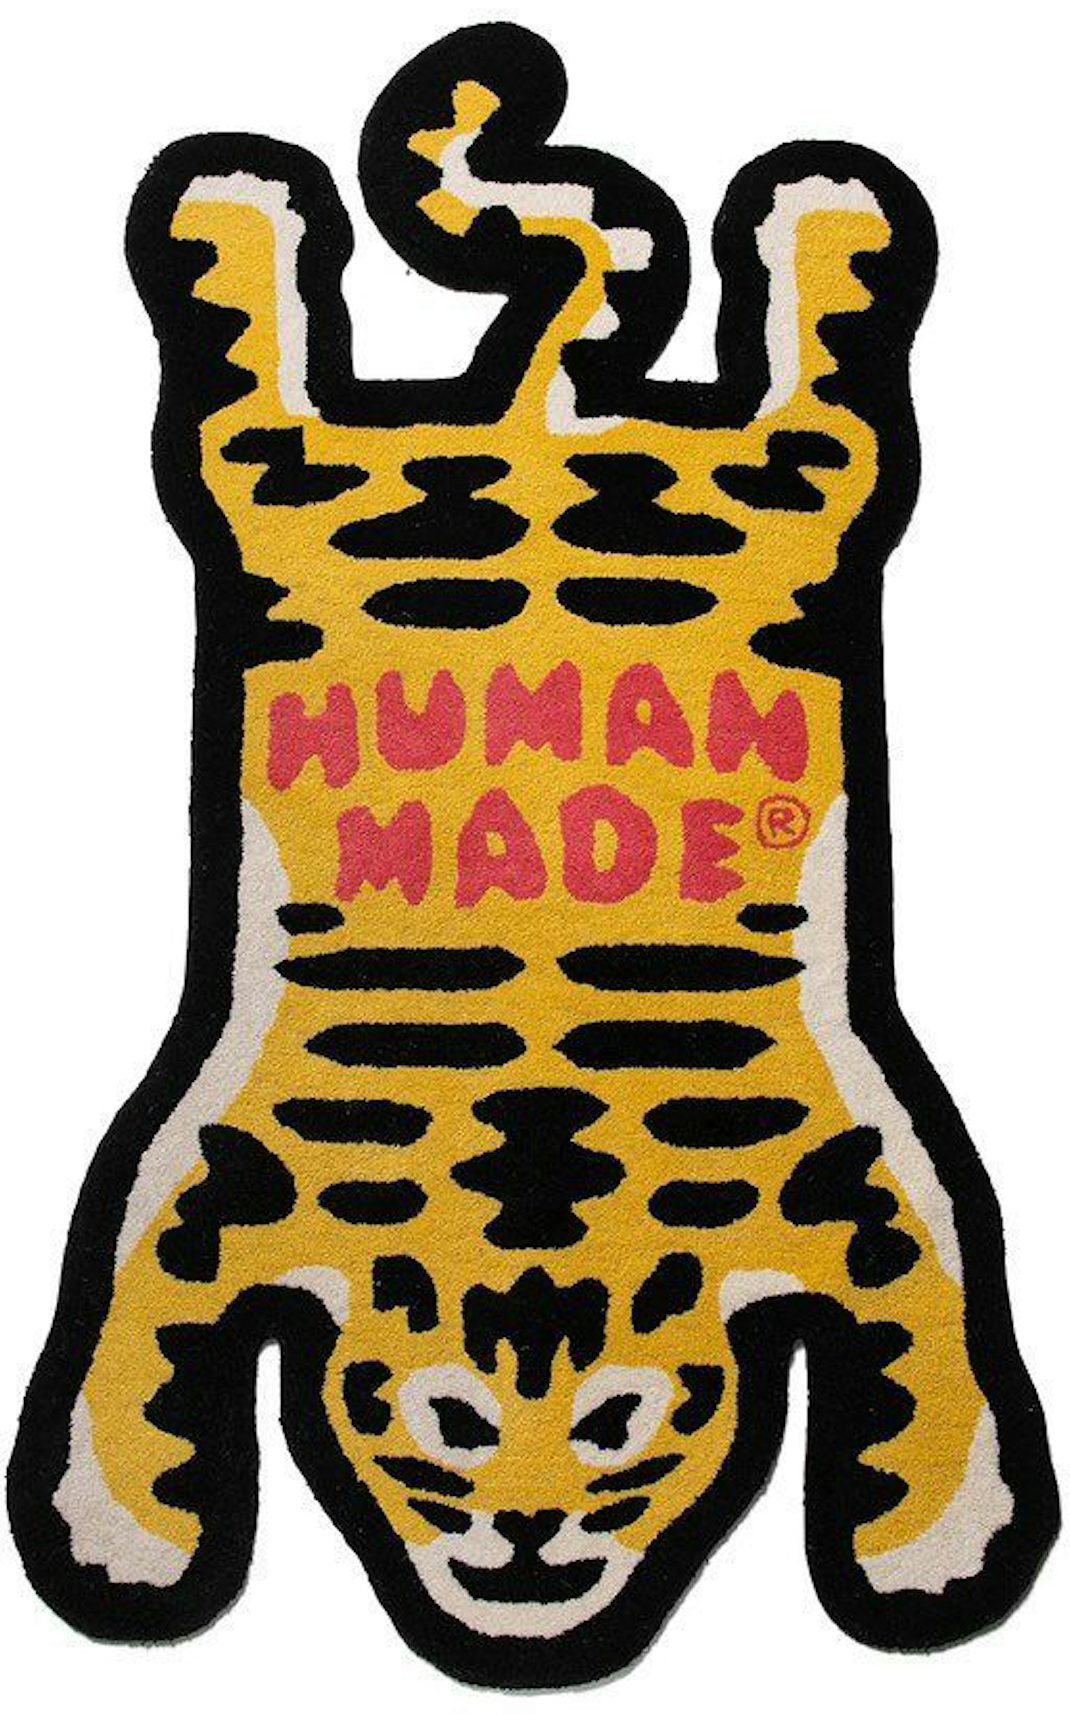 Human Made Large Tiger Rug Yellow